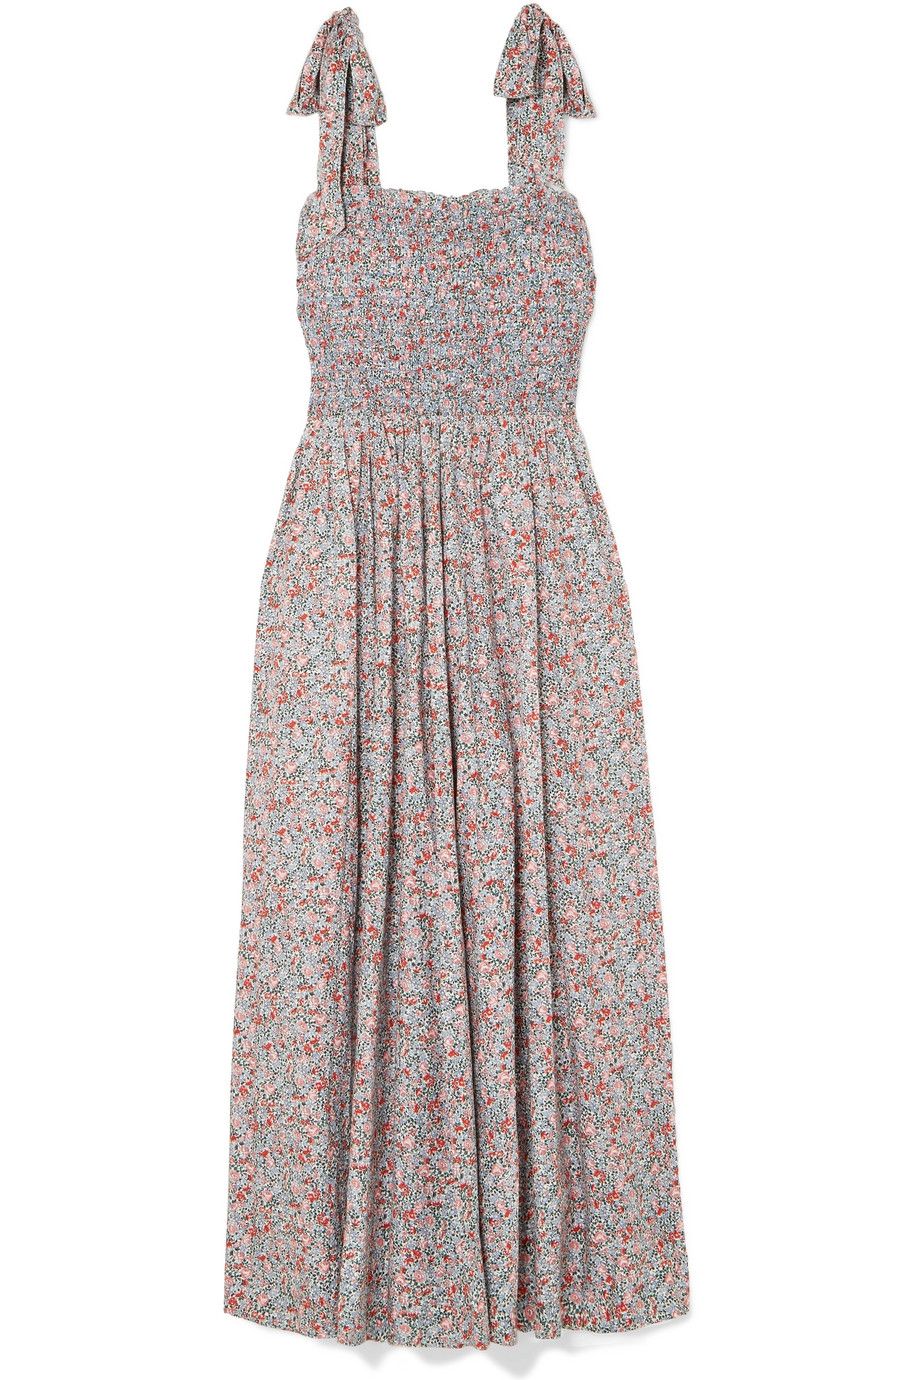 Jasmine Shirred Floral-Print Cotton-Poplin Maxi Dress